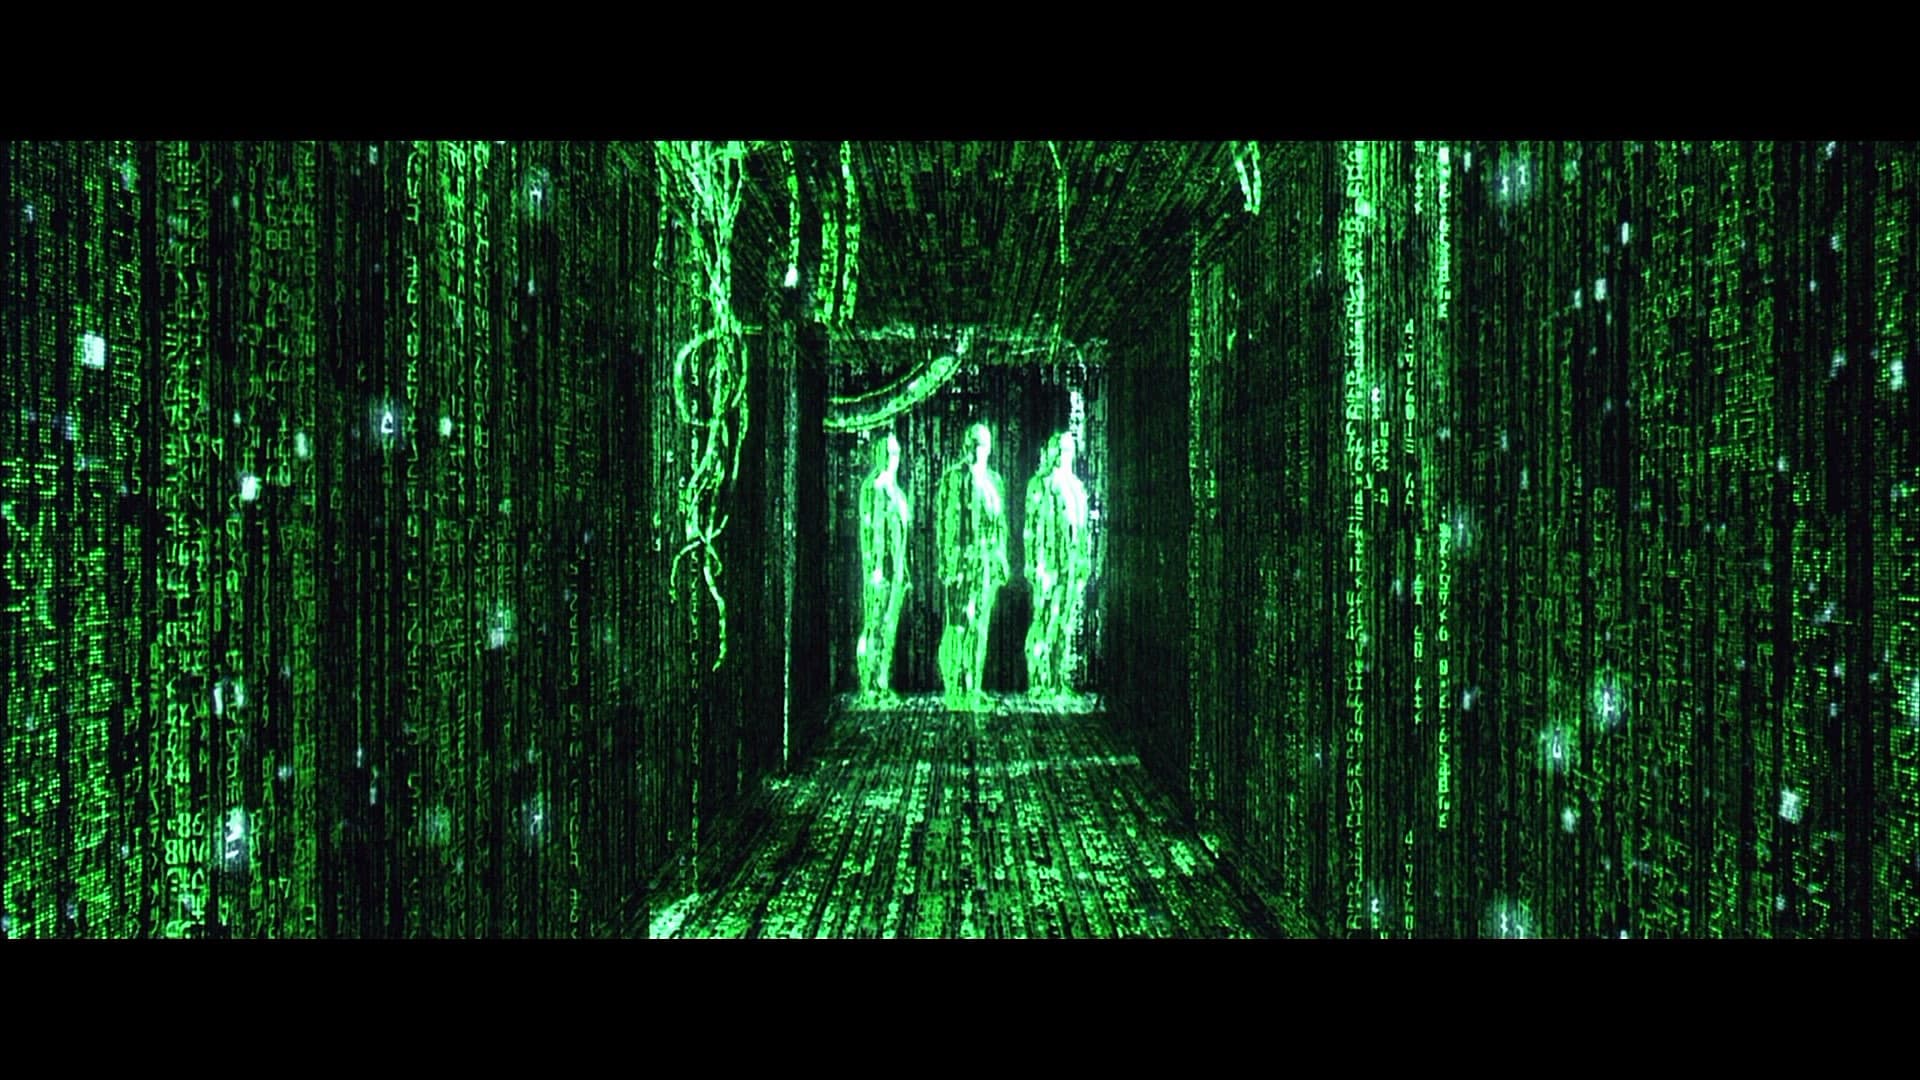 The Matrix Reloaded 